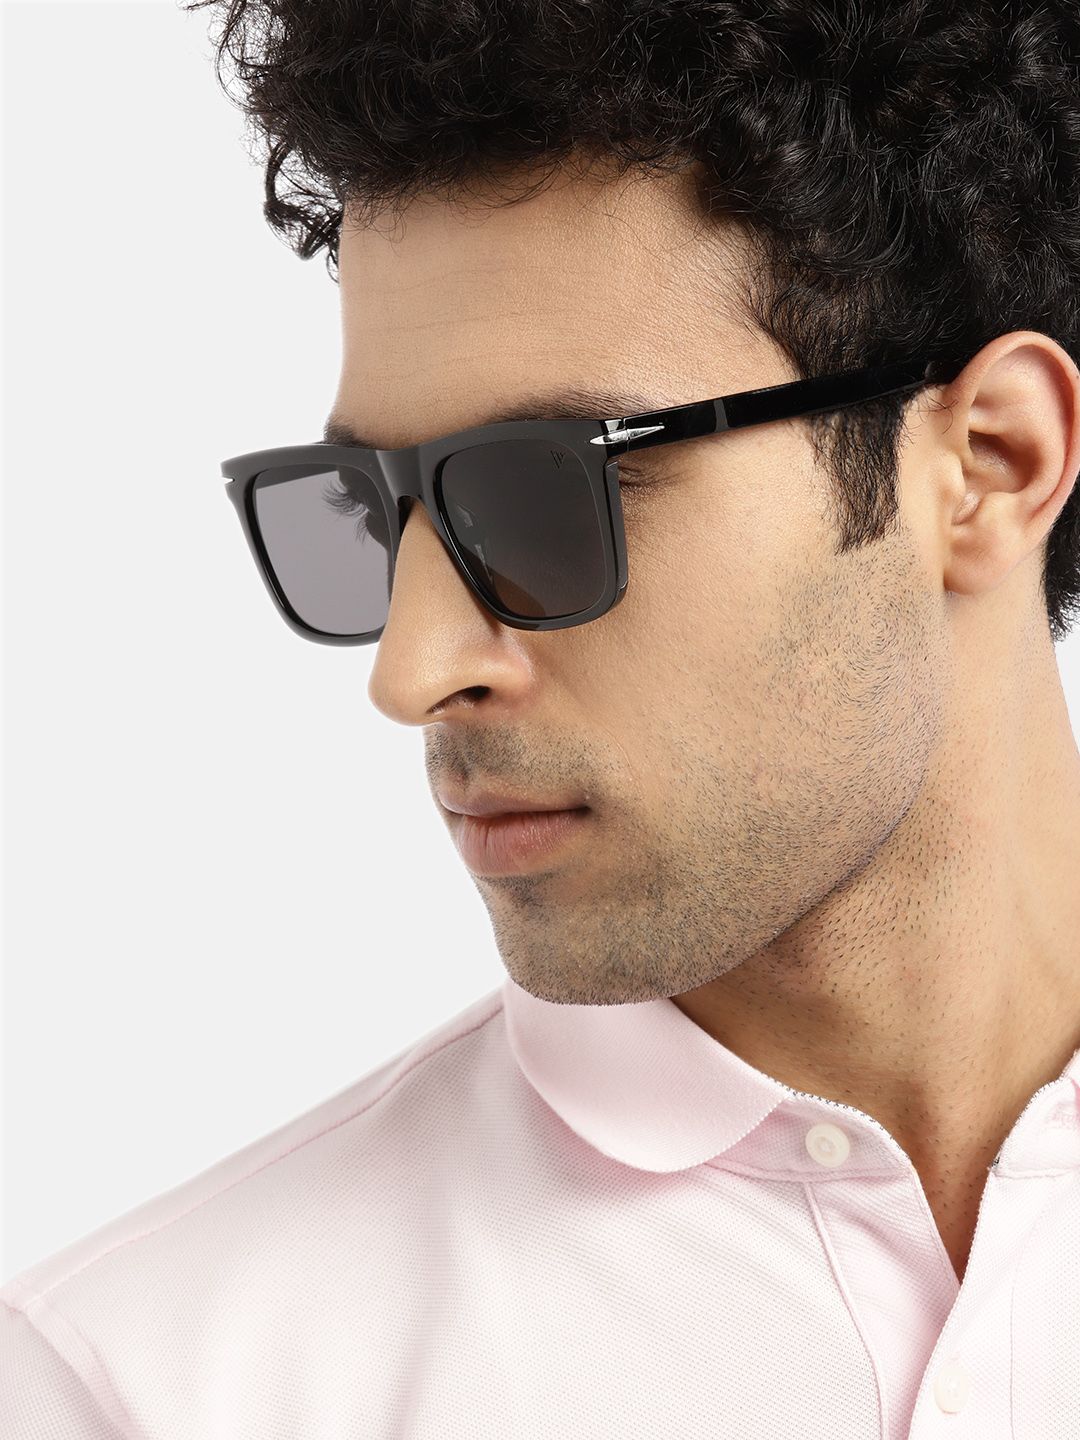 Voyage Unisex Black Lens & Black Wayfarer Sunglasses with UV Protected Lens Price in India